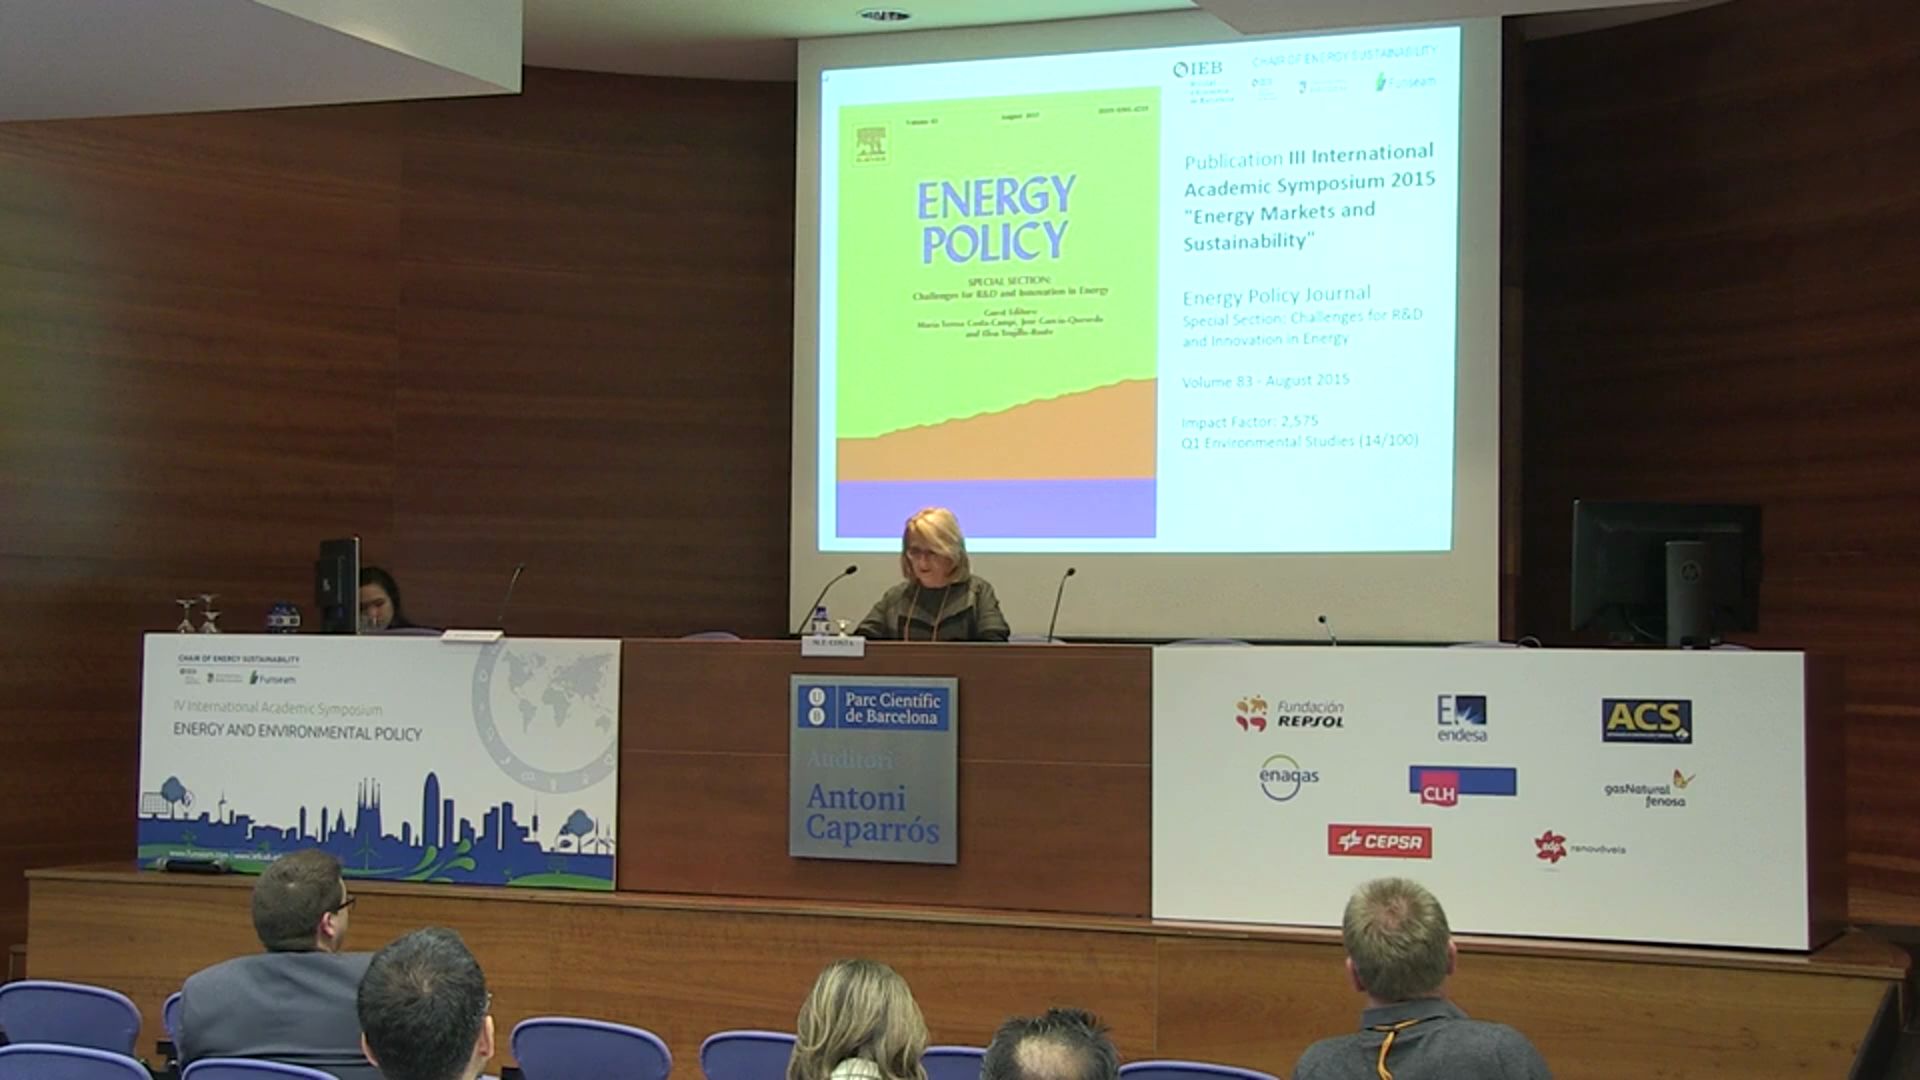 Closing Ceremony IV International Academic Symposium on Energy and Environmental Policy